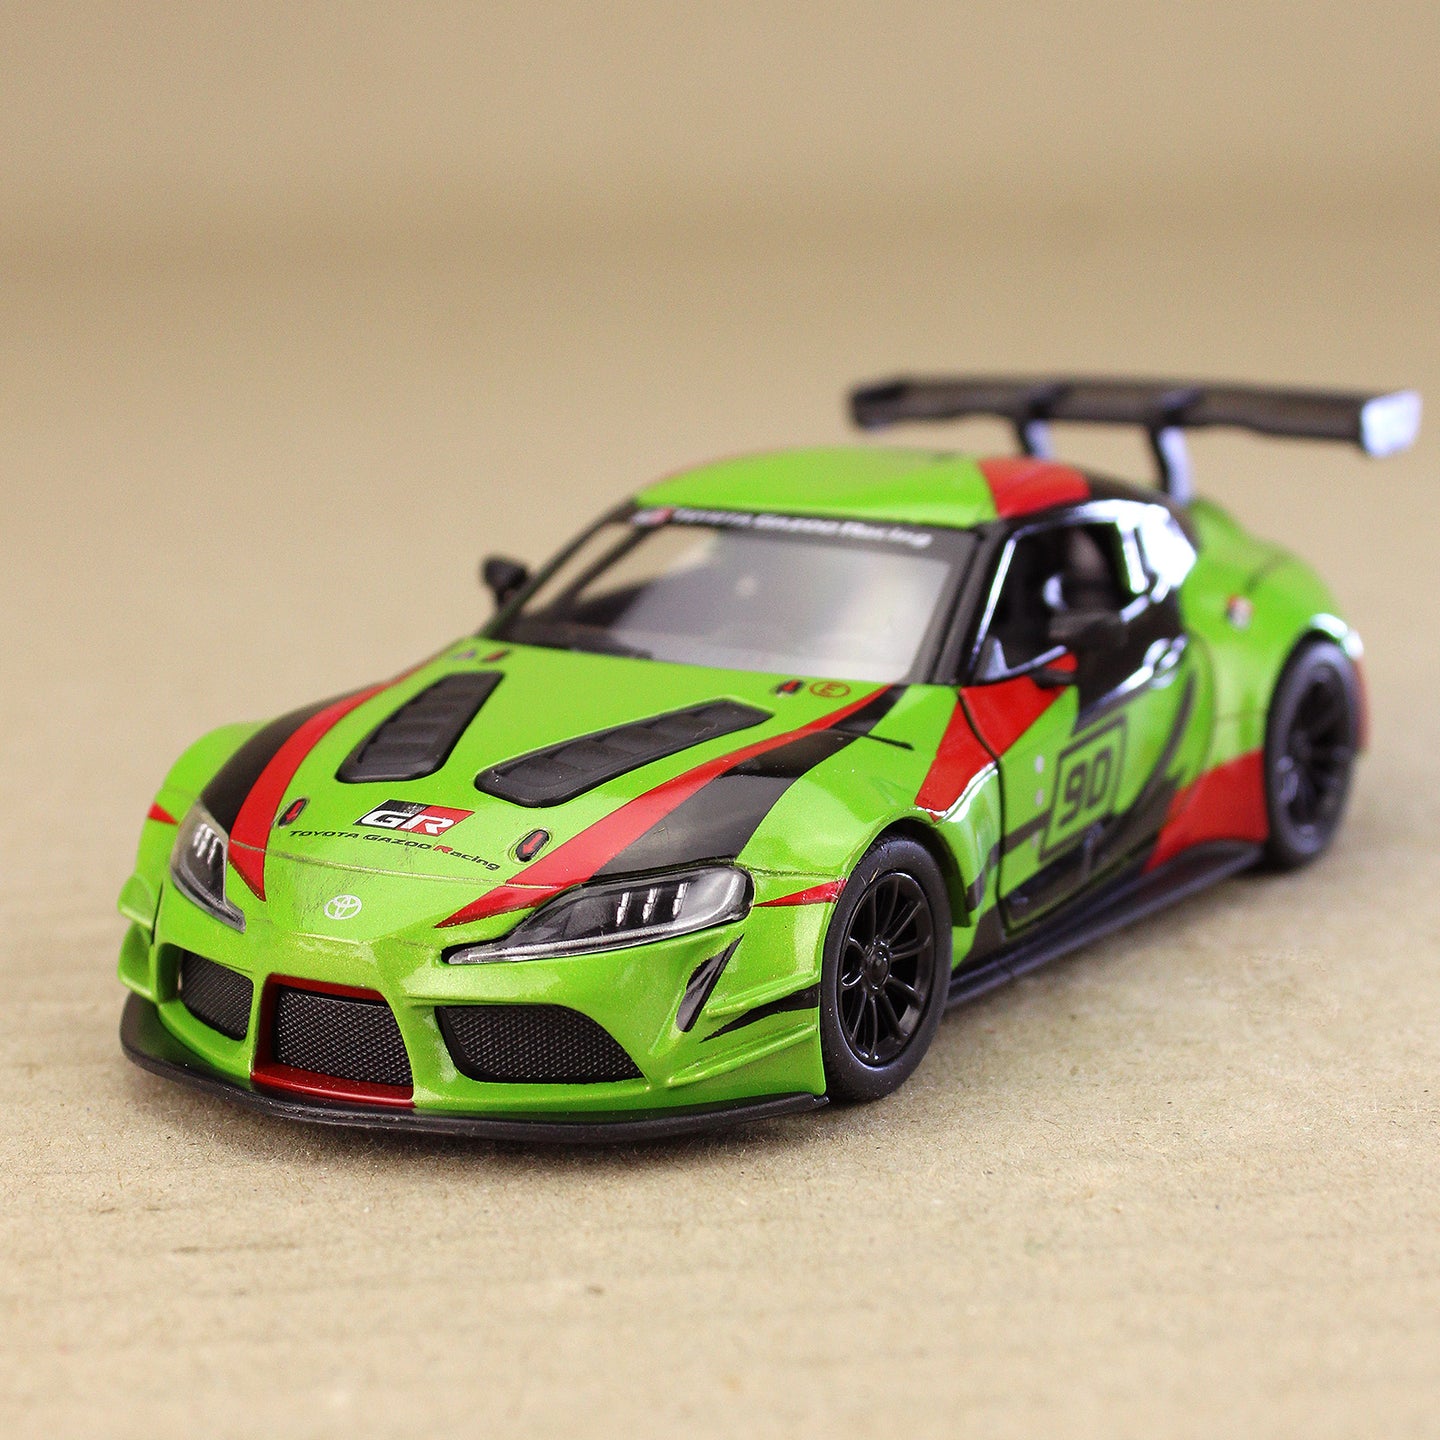 2020 Toyota Supra GR Racing Concept Car - Green